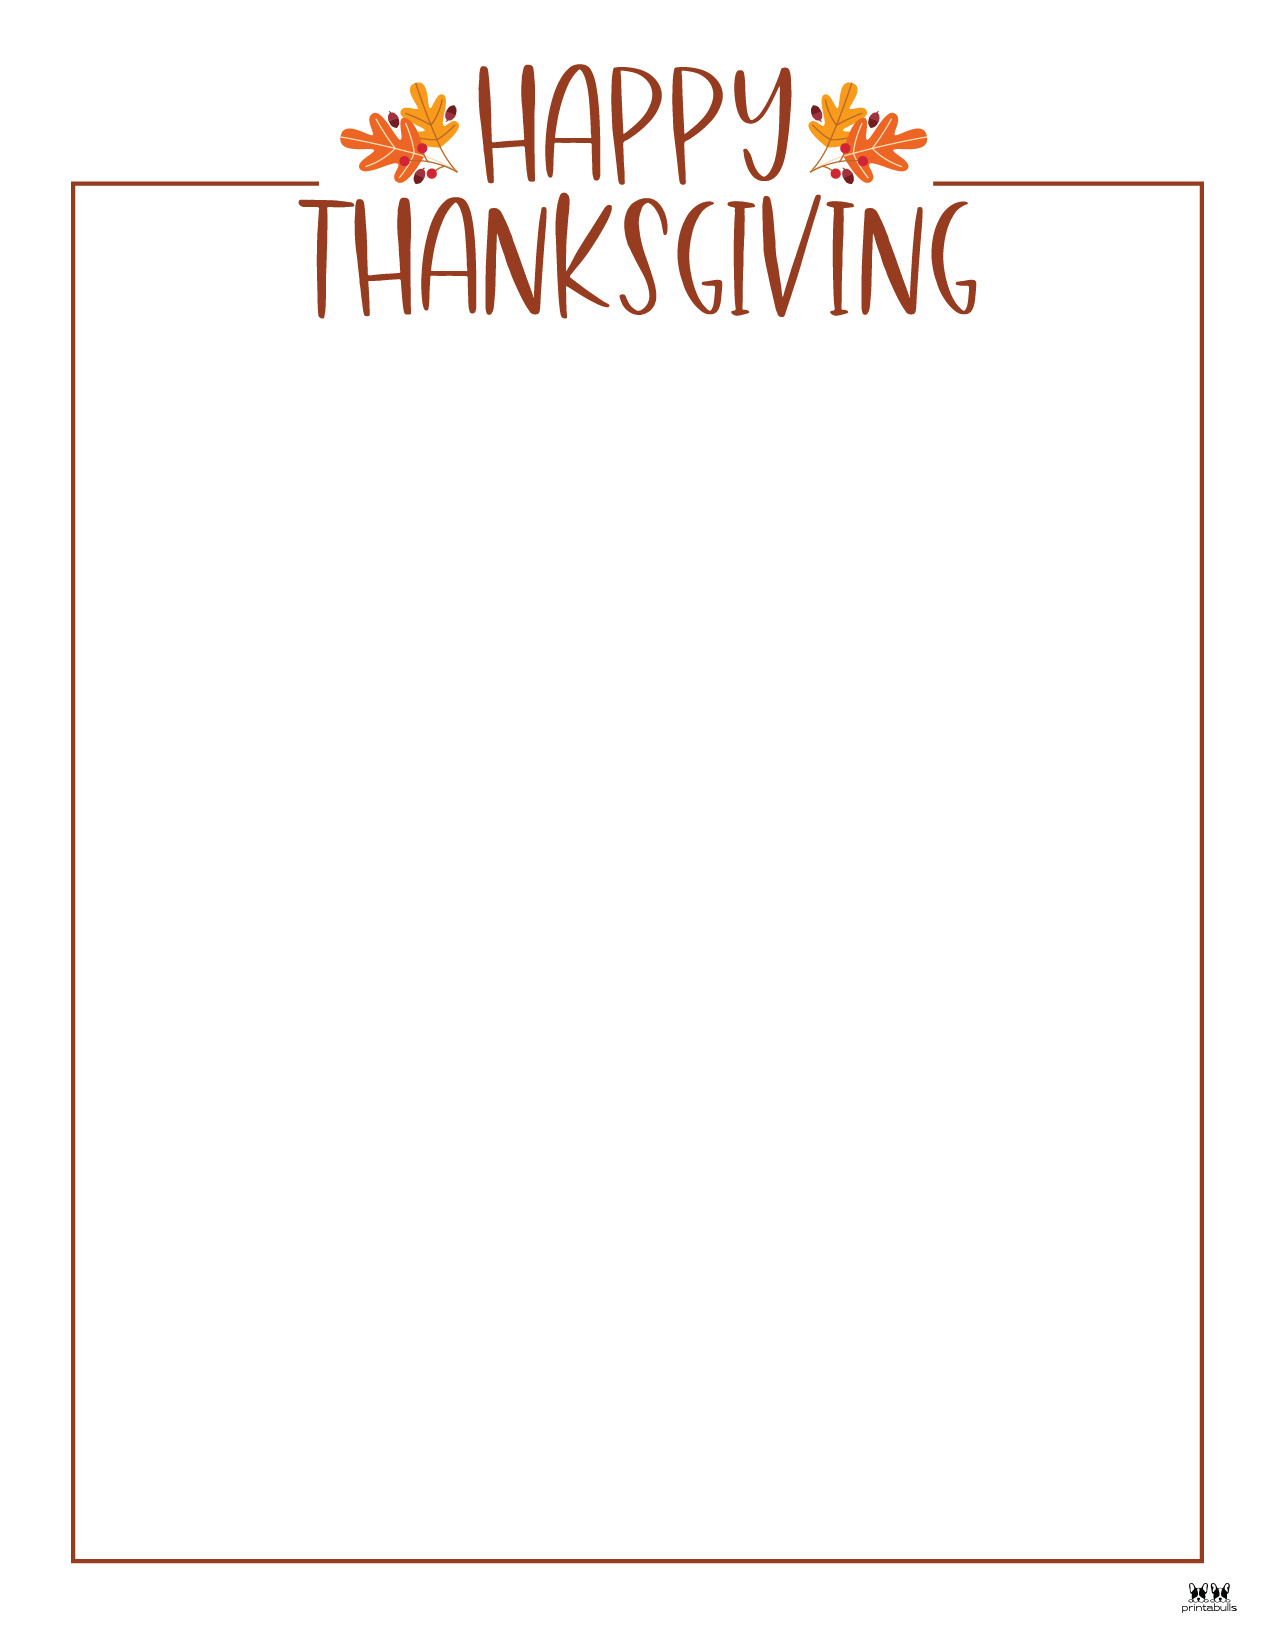 Thanksgiving Borders & Frames - 41 FREE Pages | Printabulls